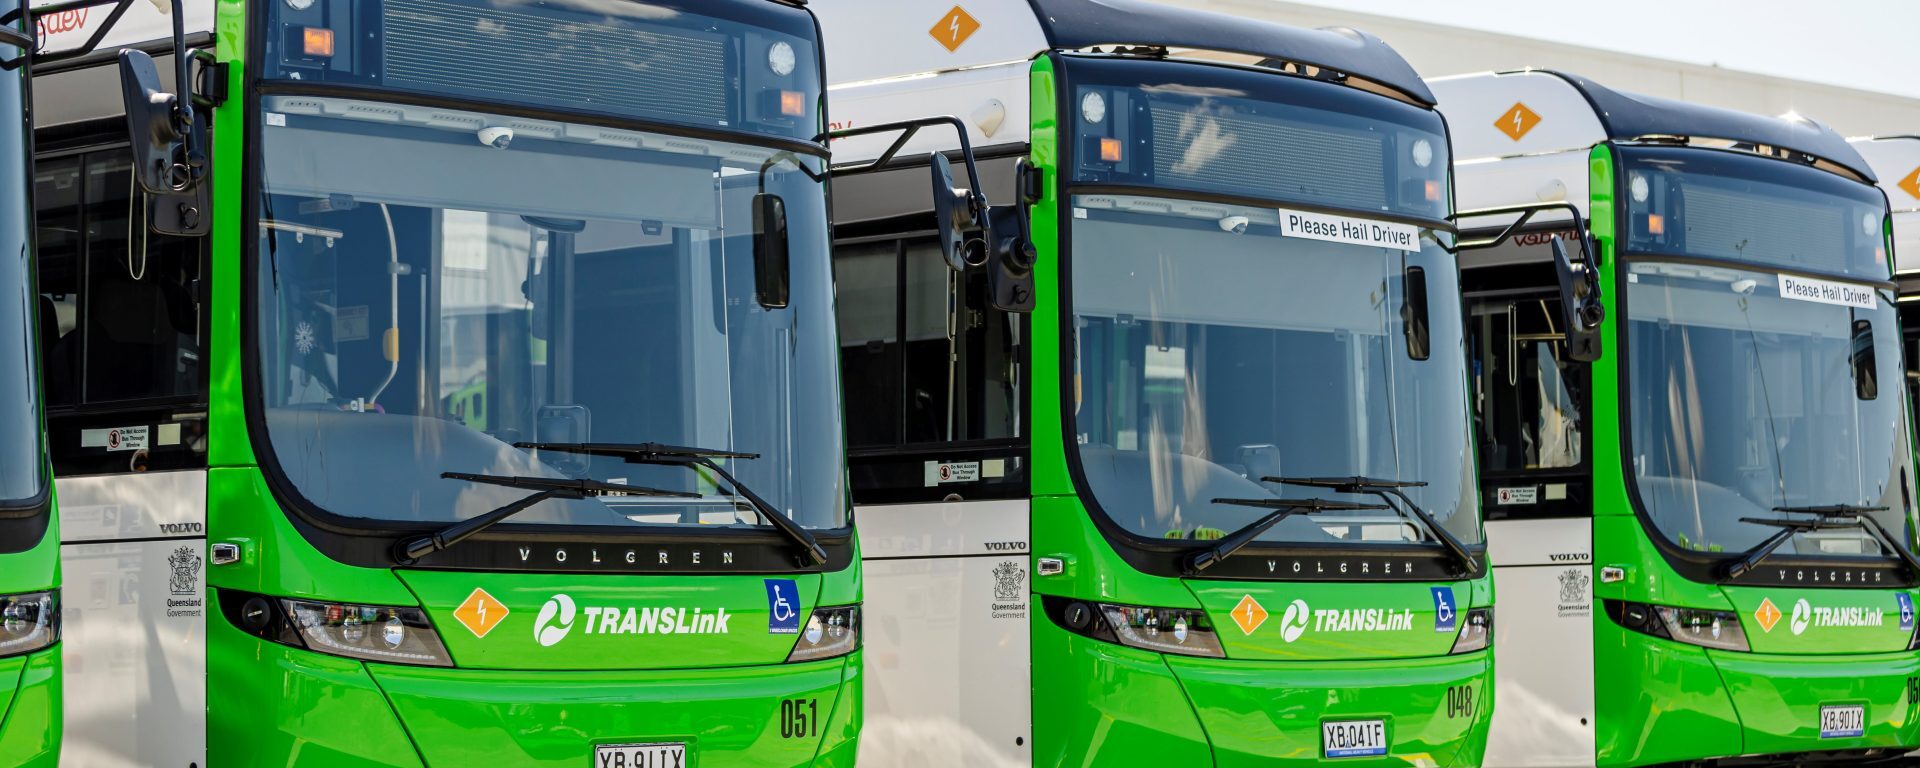 Translink green electric buses in Brisbane